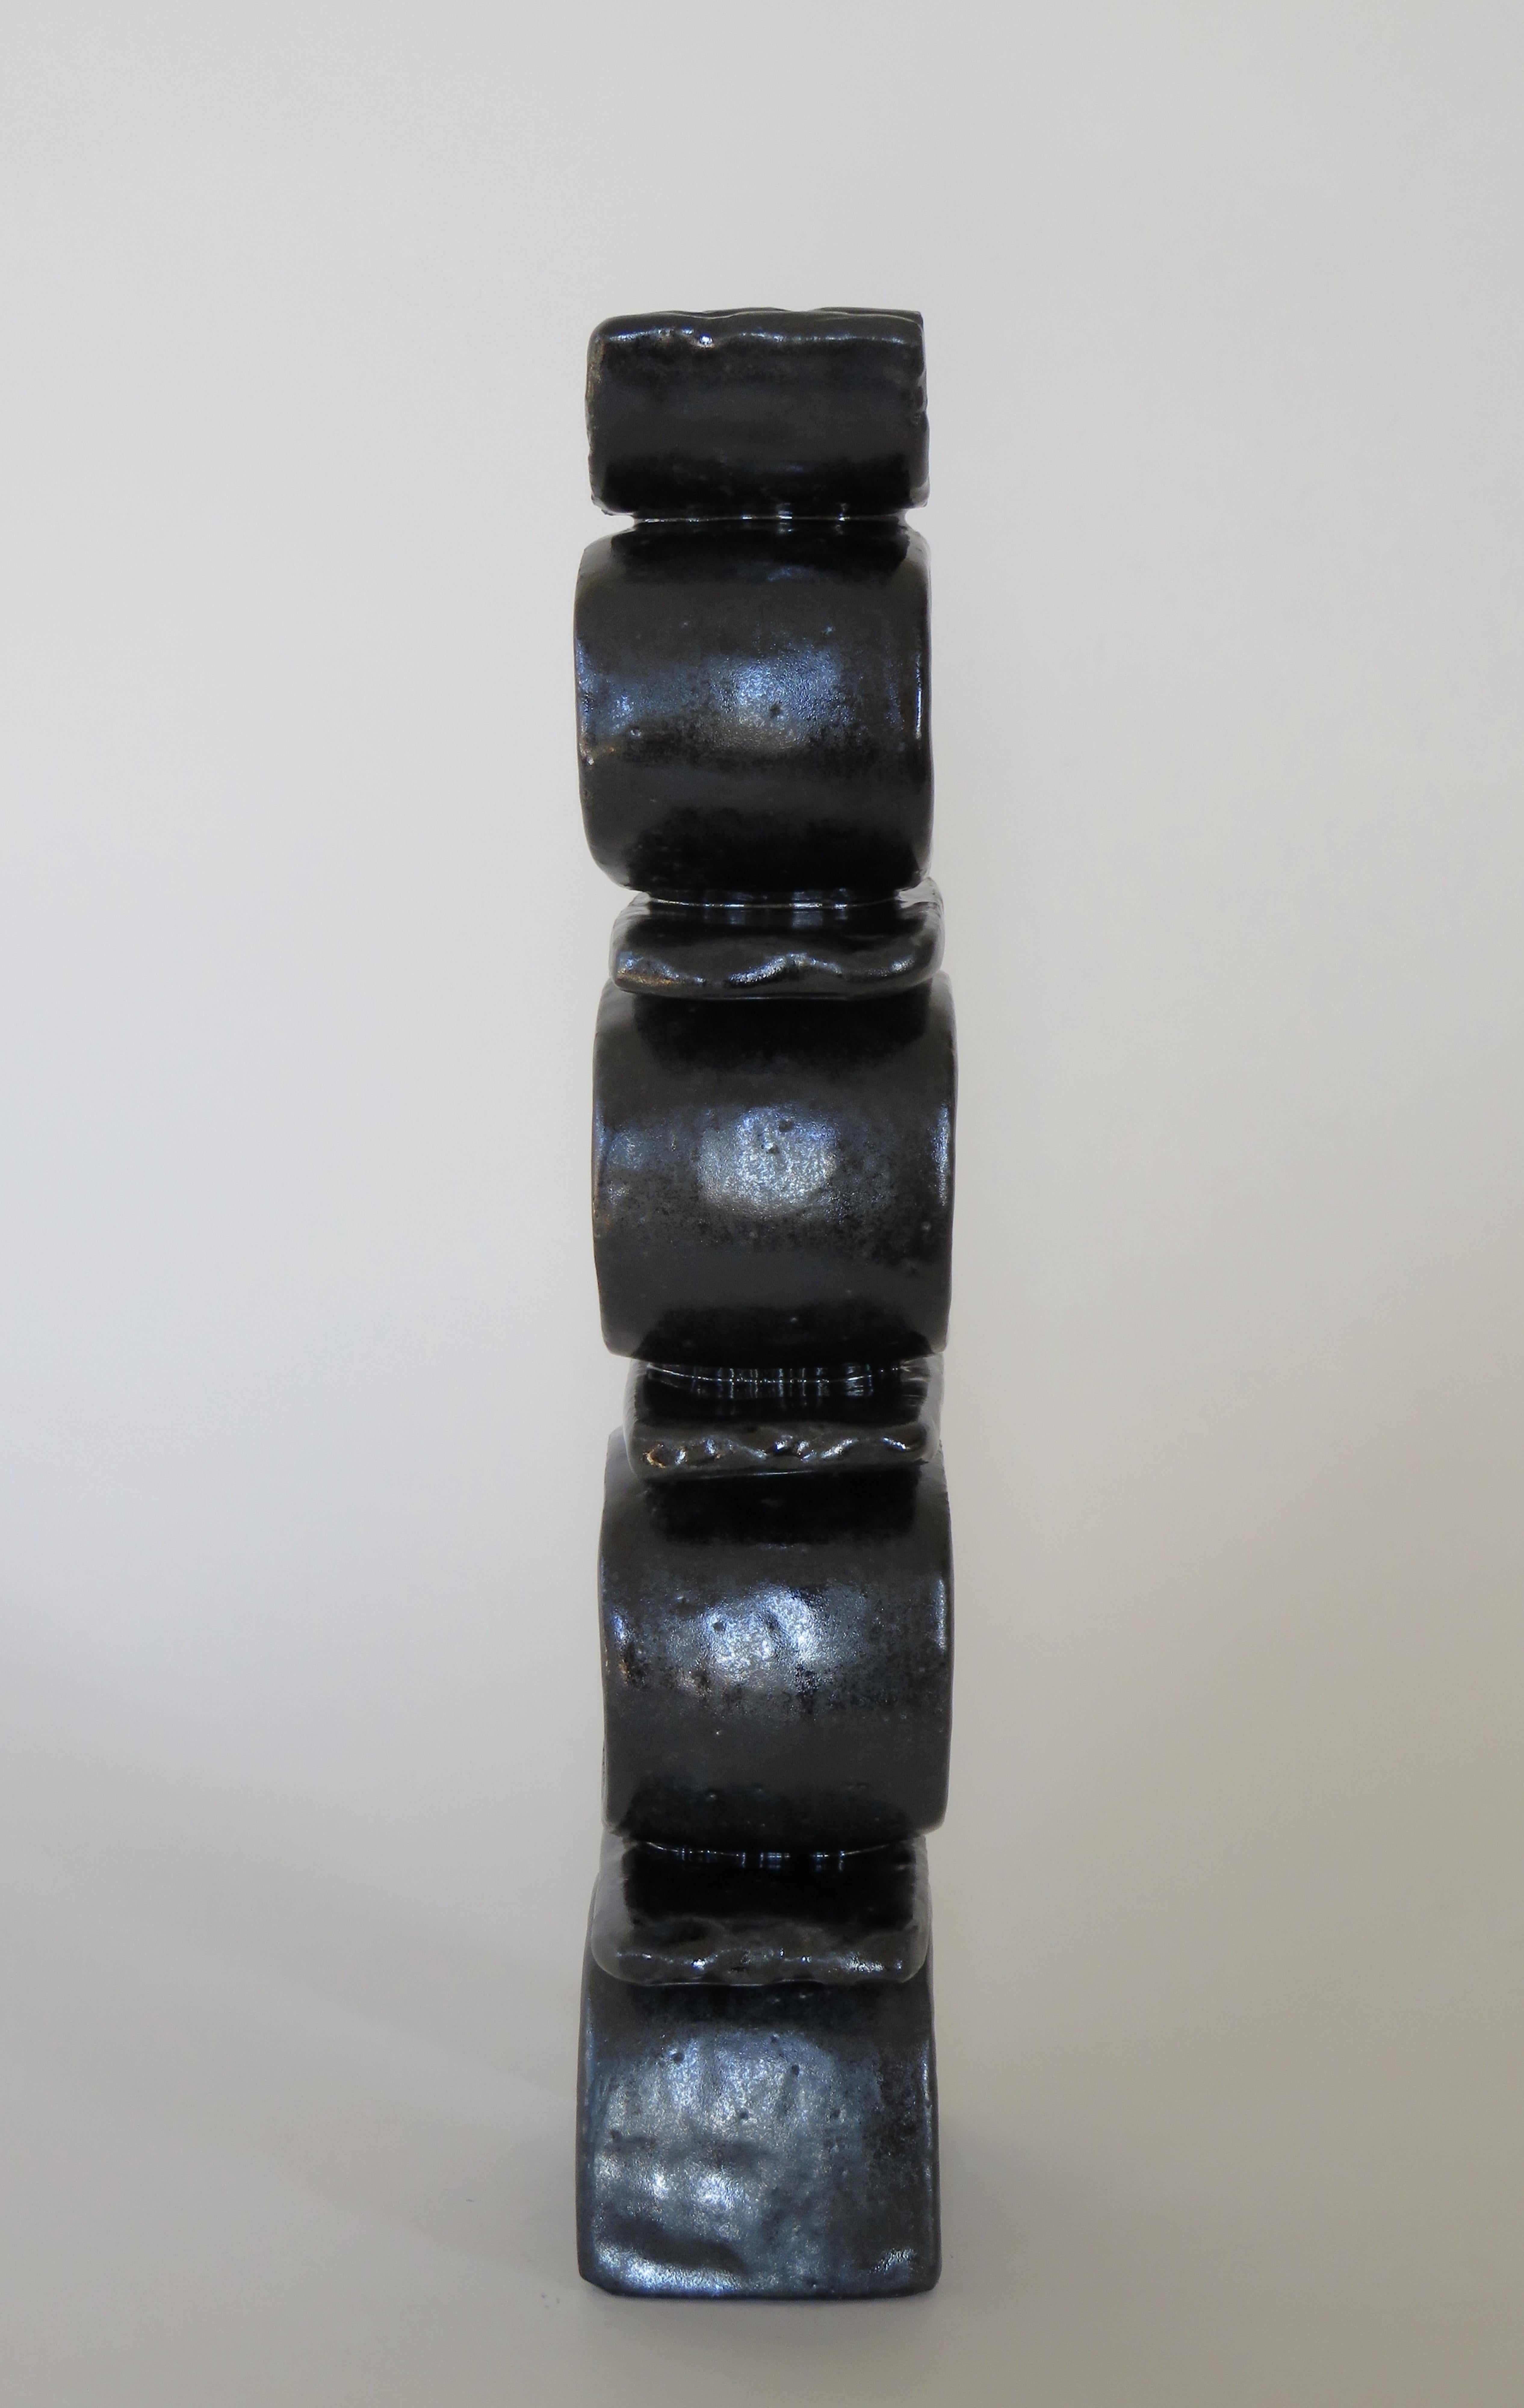 Stacked Rings and Bars, Handbuilt Shiny Black Totemic Ceramic Sculpture 3